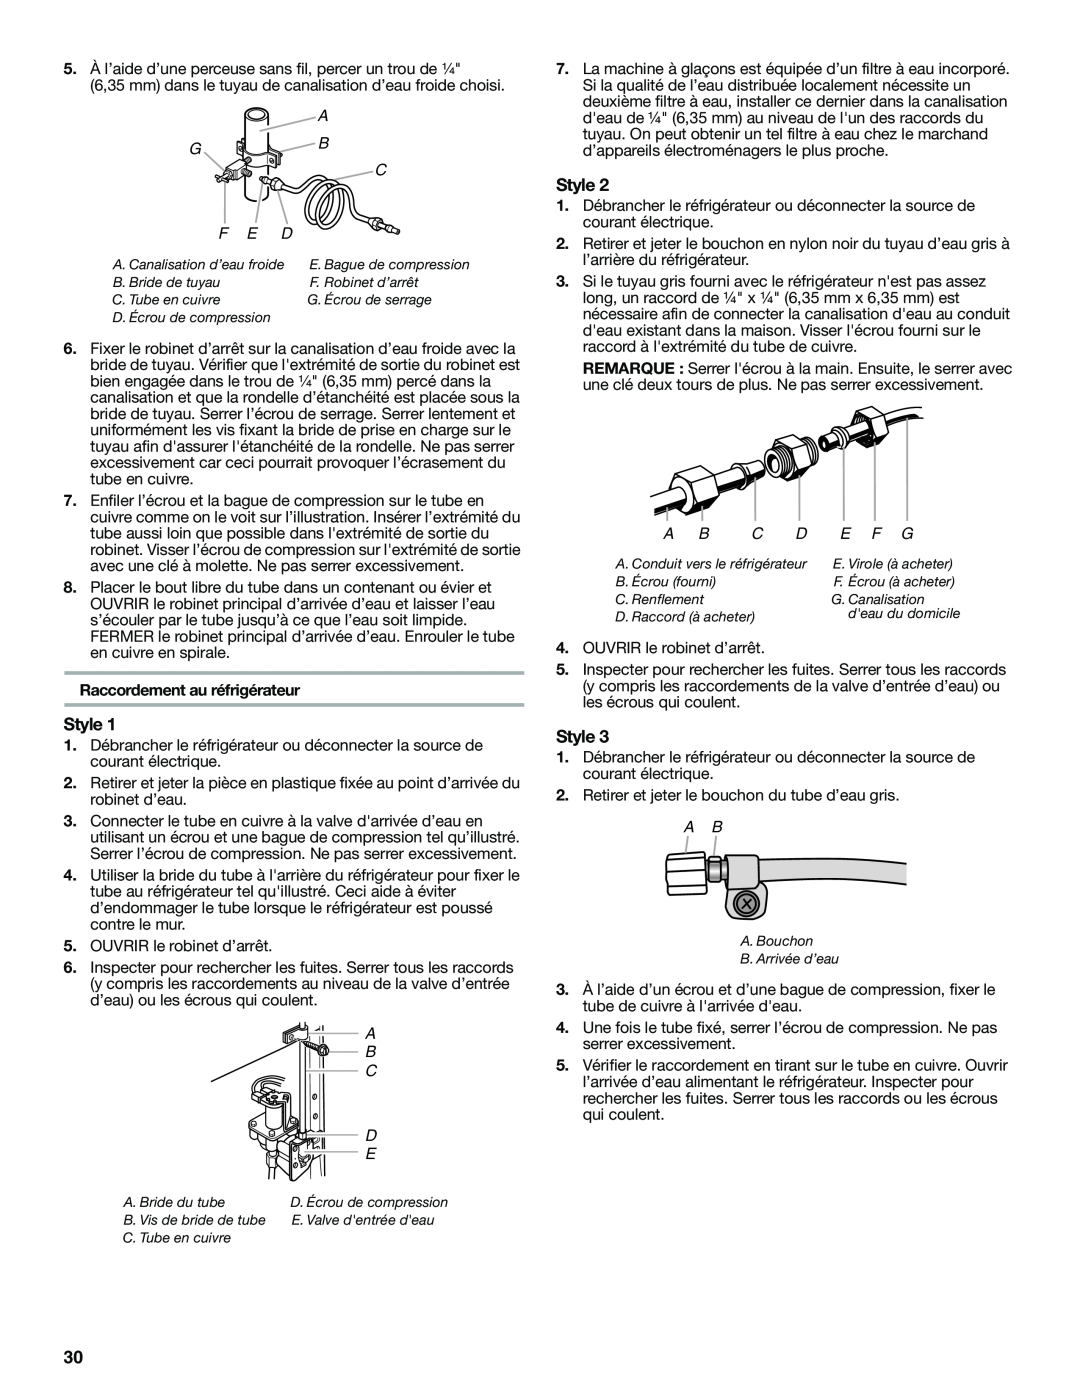 Whirlpool W10346247A installation instructions Raccordement au réfrigérateur, Style, A G B C F E D, E F G 